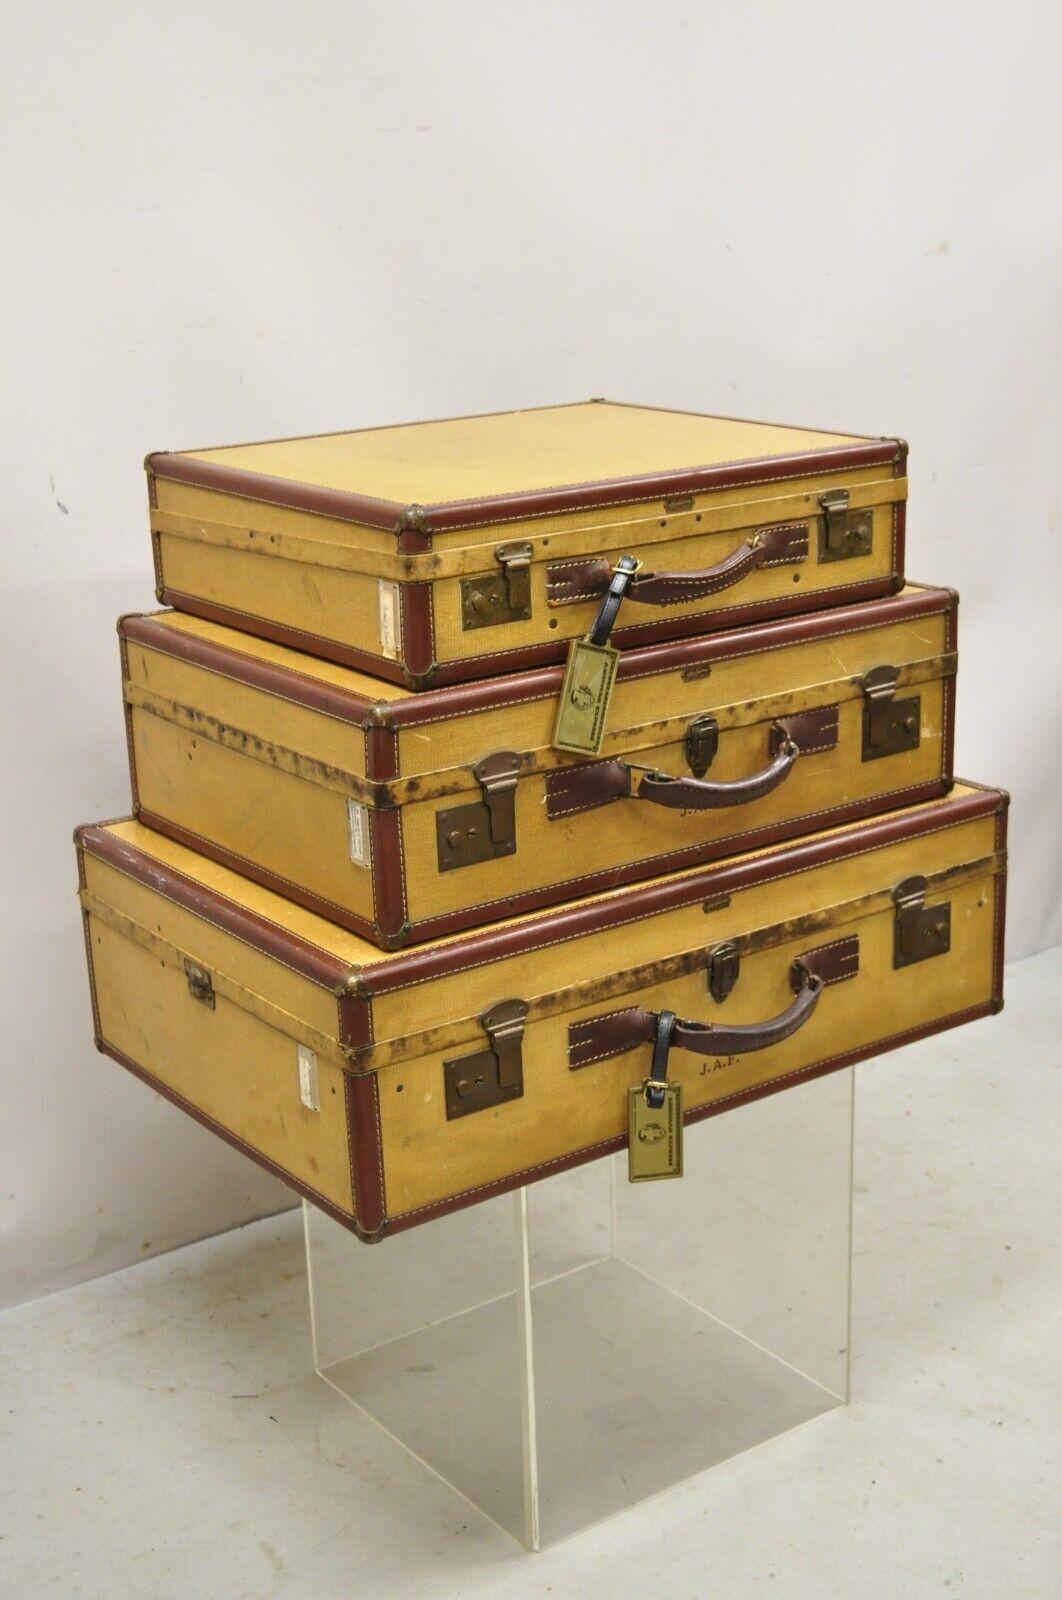 Vintage Hartman Skymate Tan Hard Case Leather Suitcase Luggage - 3 Pc Set. Item features 